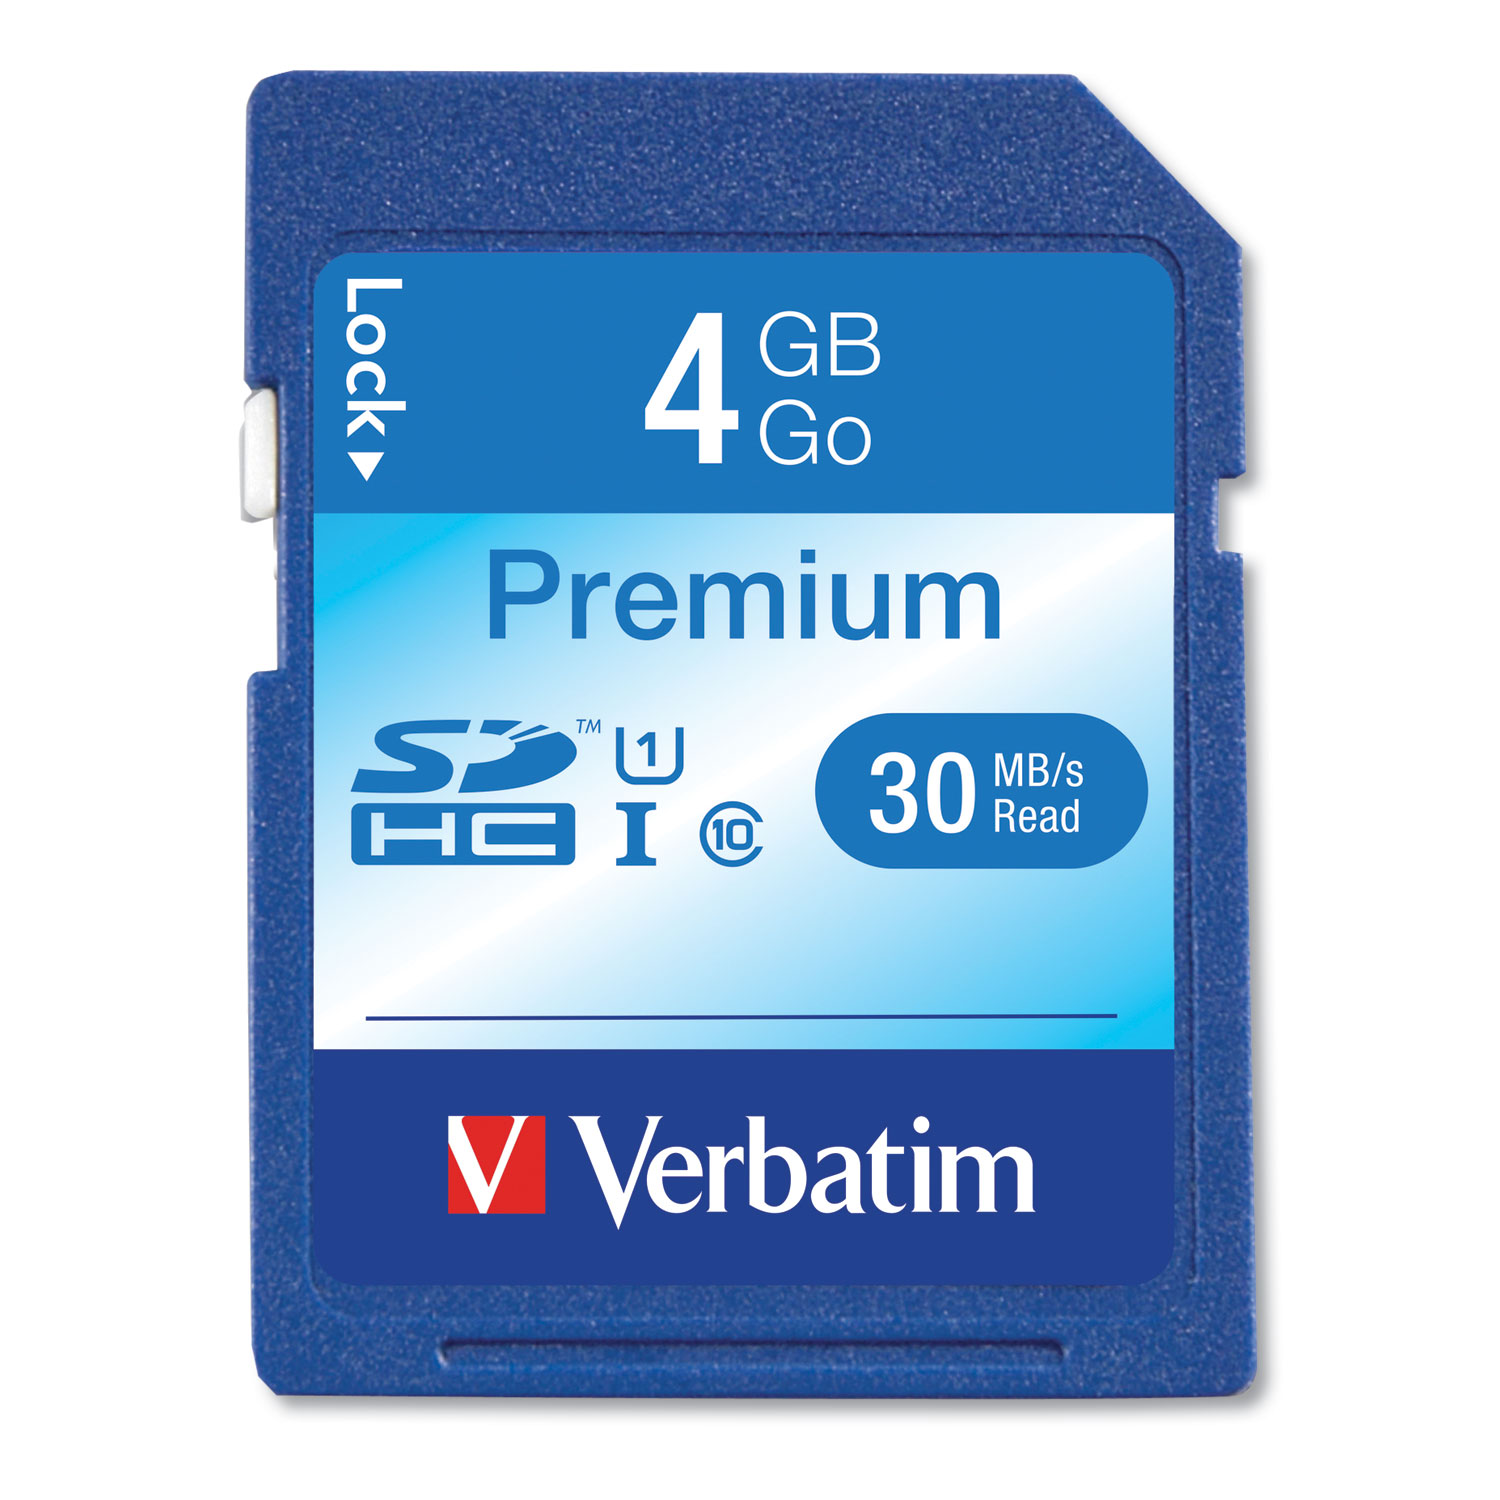  Verbatim 96171 4GB Premium SDHC Memory Card, UHS-I U1 Class 10, Up to 30MB/s Read Speed (VER96171) 